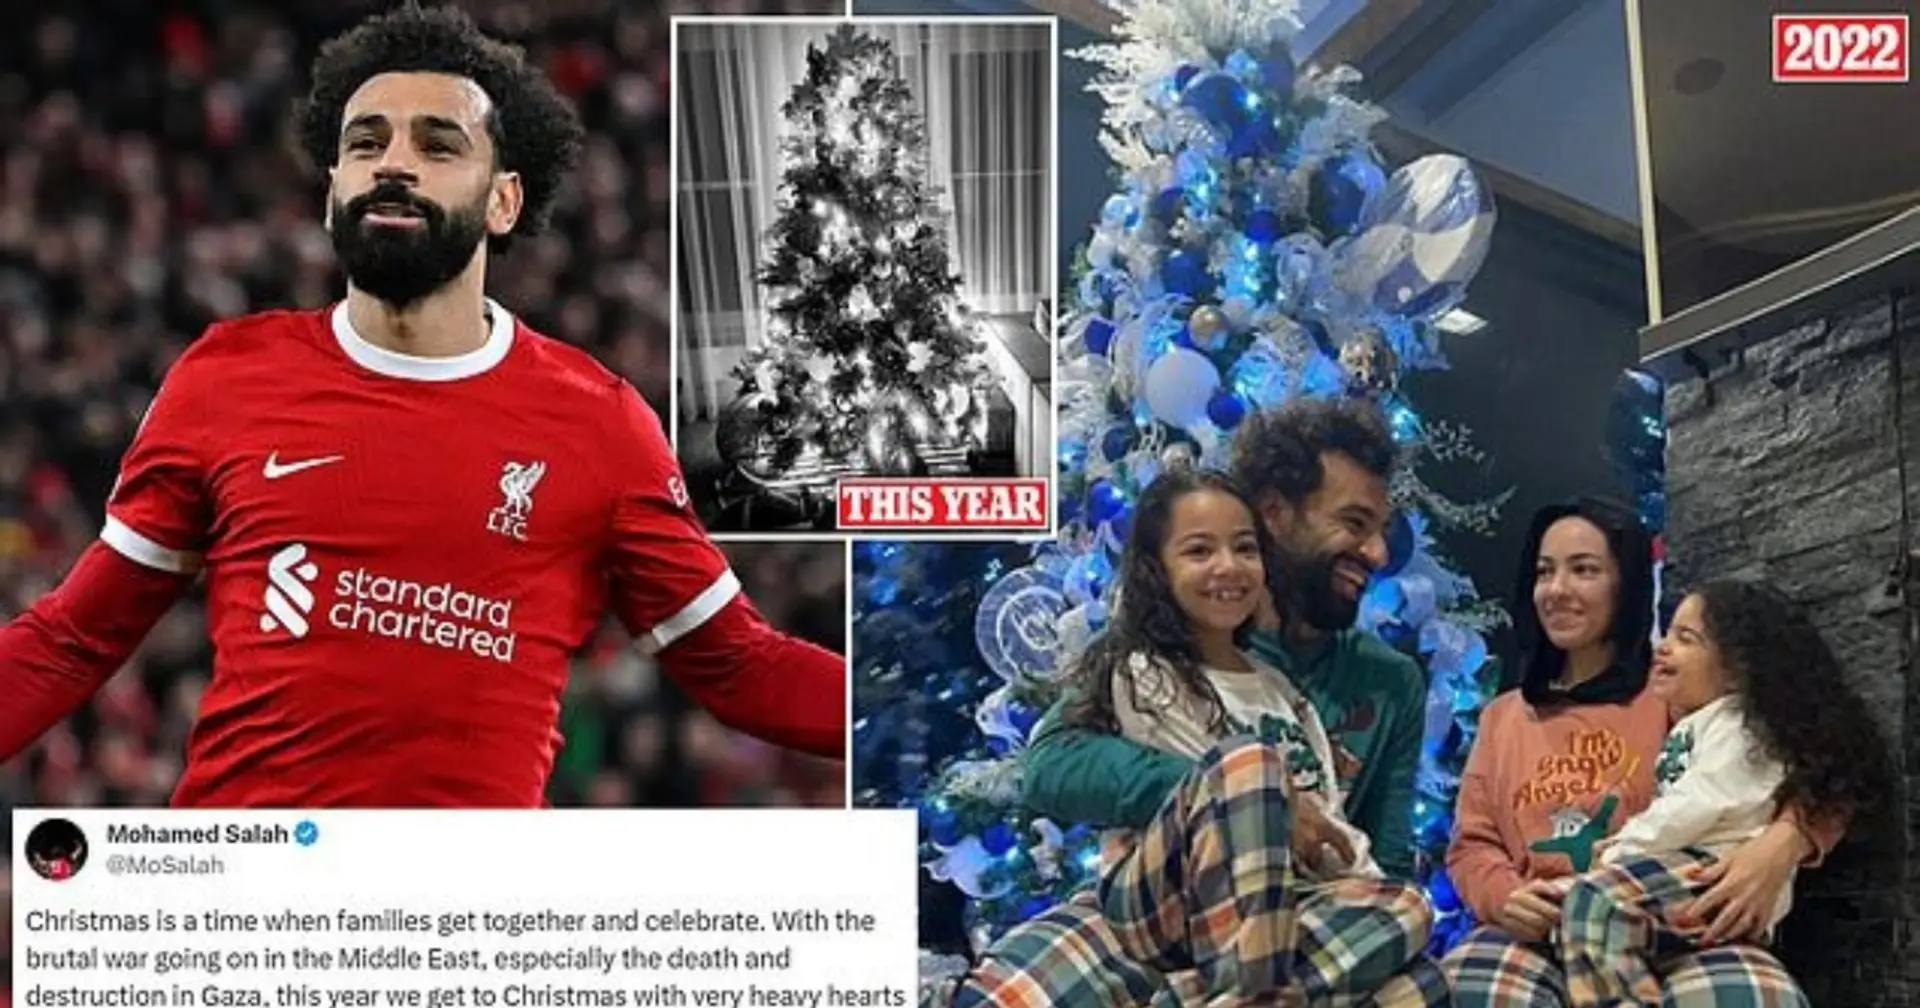 Salah wird kritisiert, weil er Weihnachten feiert: Warum reagieren Muslime so heftig?